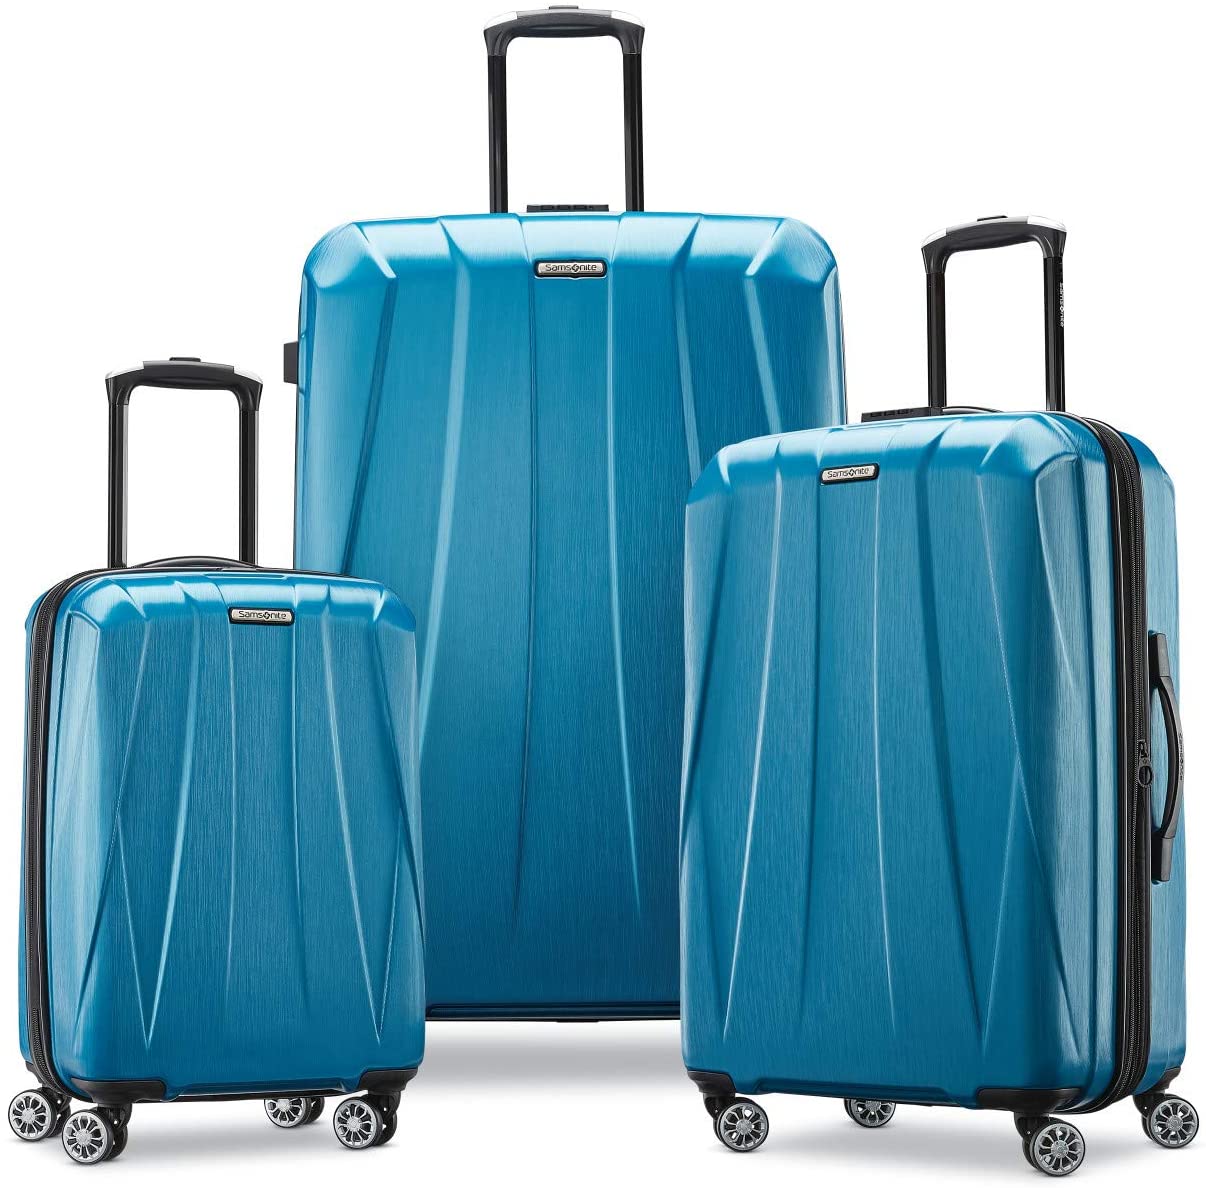 Samsonite Expandable Luggage 3-Piece Set